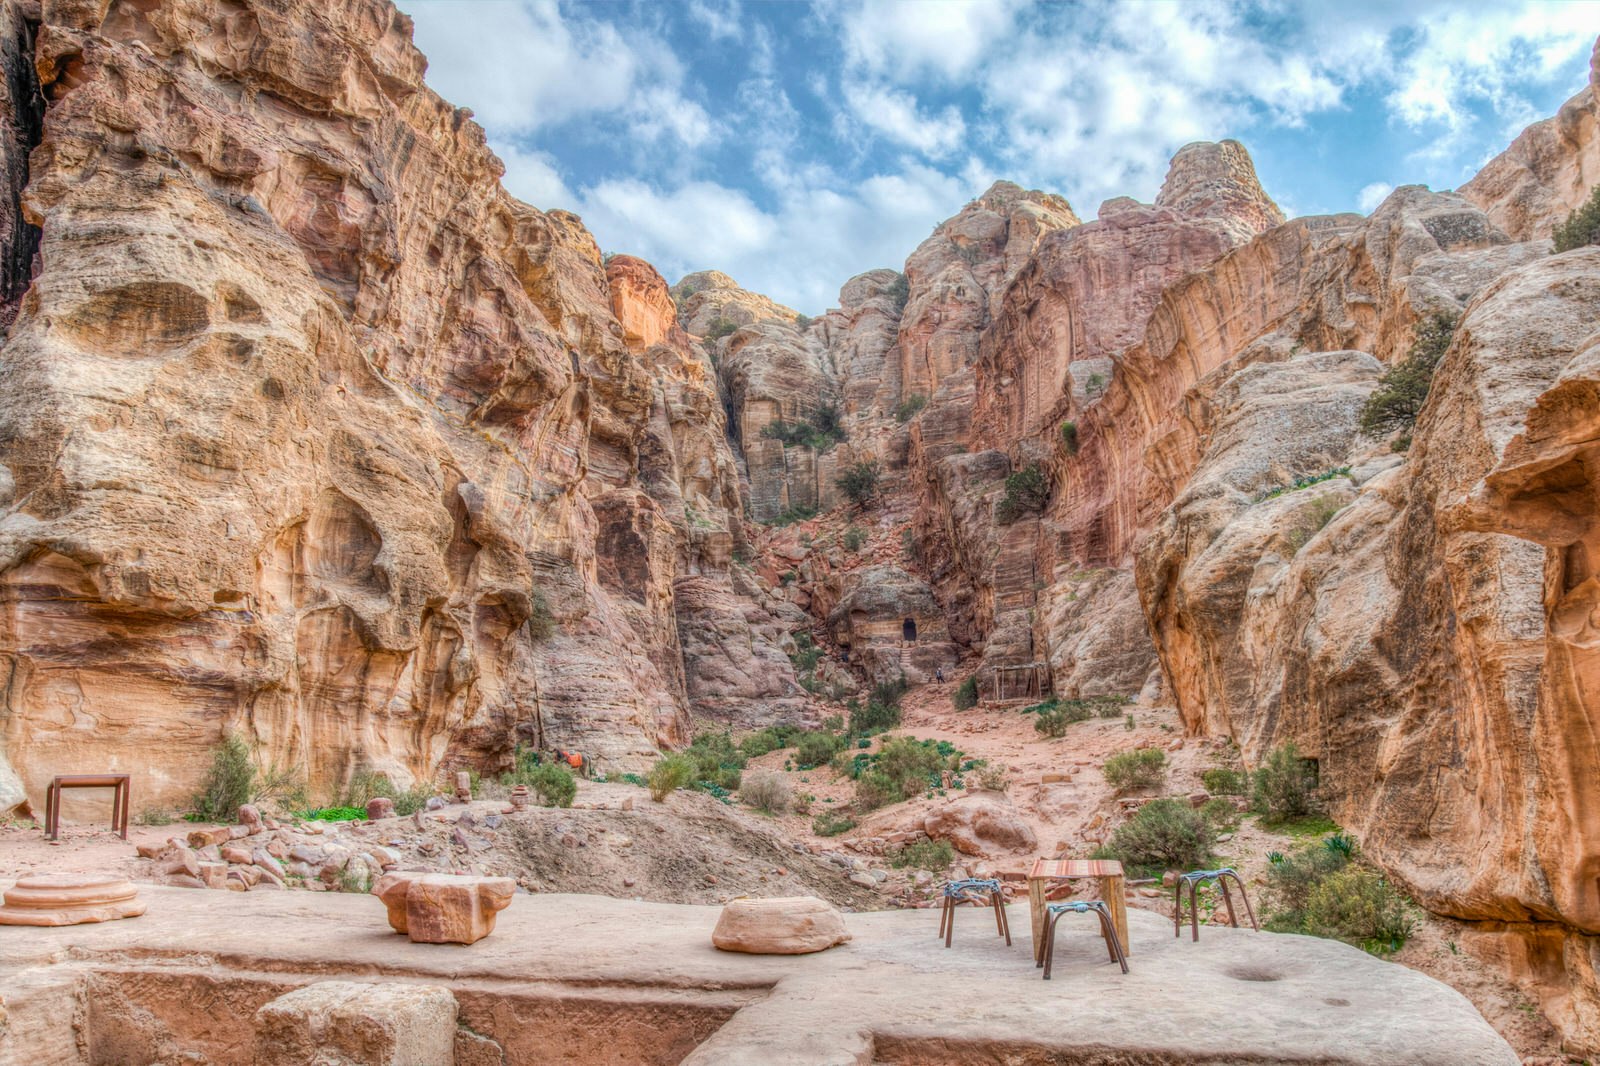 View of the tombs near Wadi Farasa, Petra, Jordan